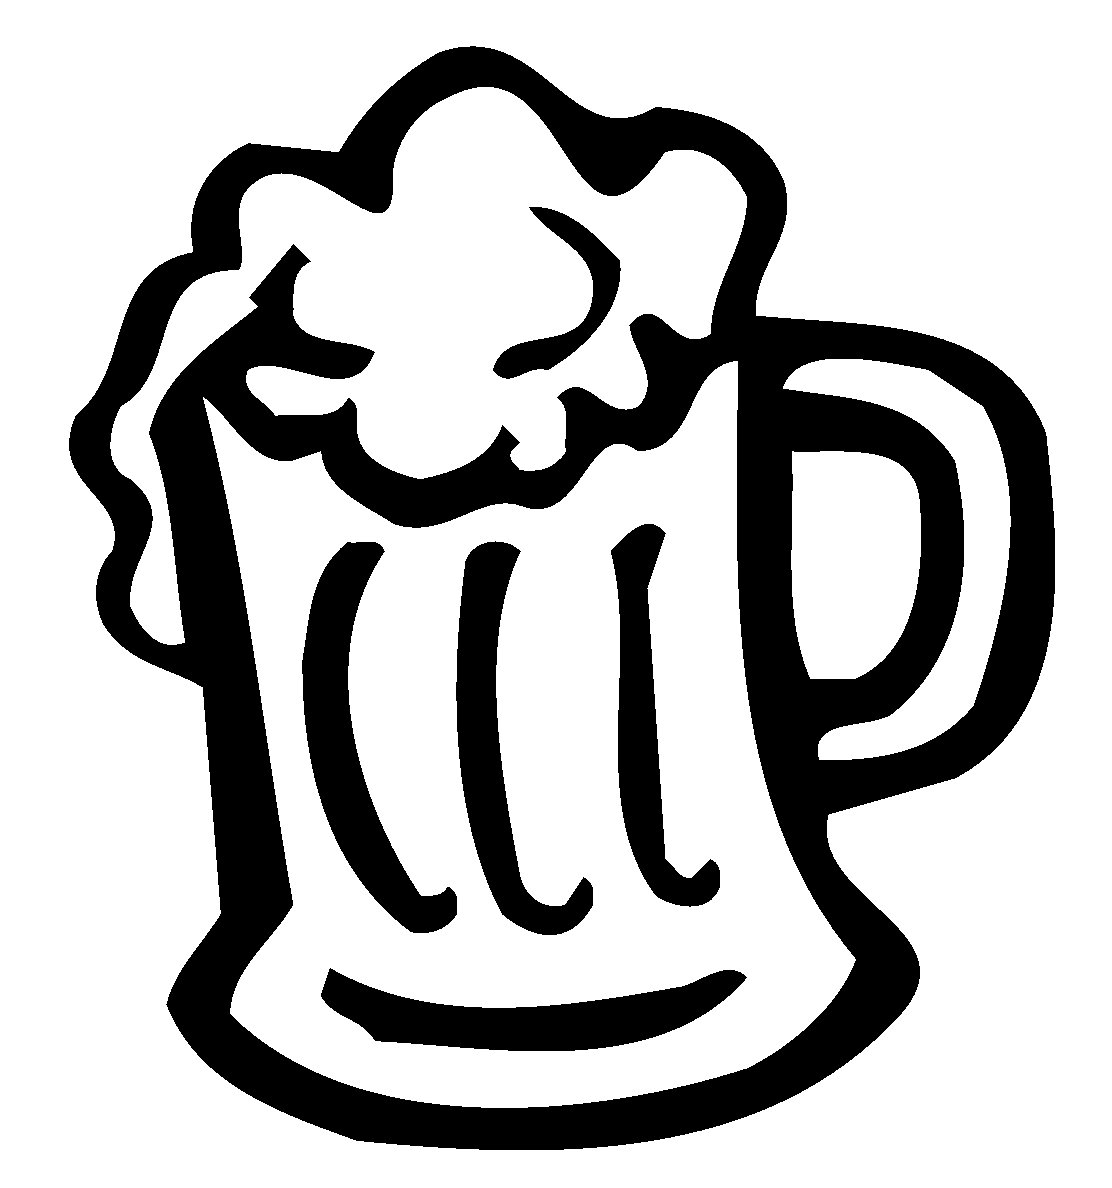 Two Beer Mugs Clip Art